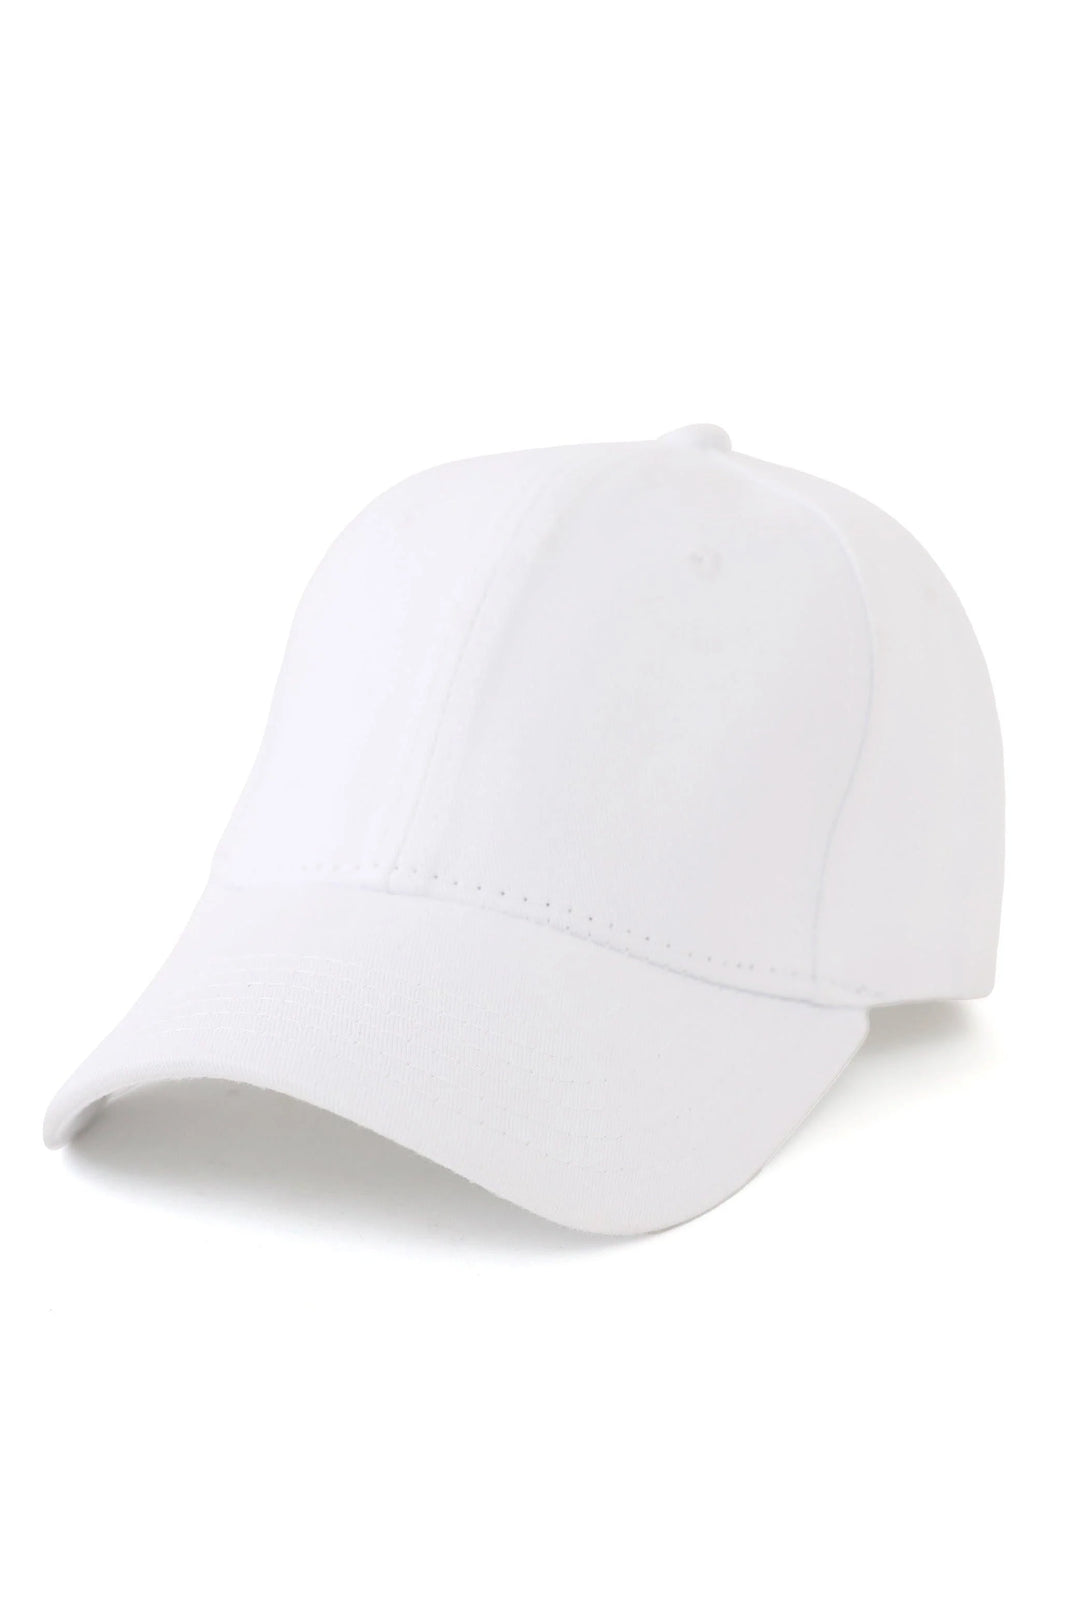 WHITE BASEBALL CAP